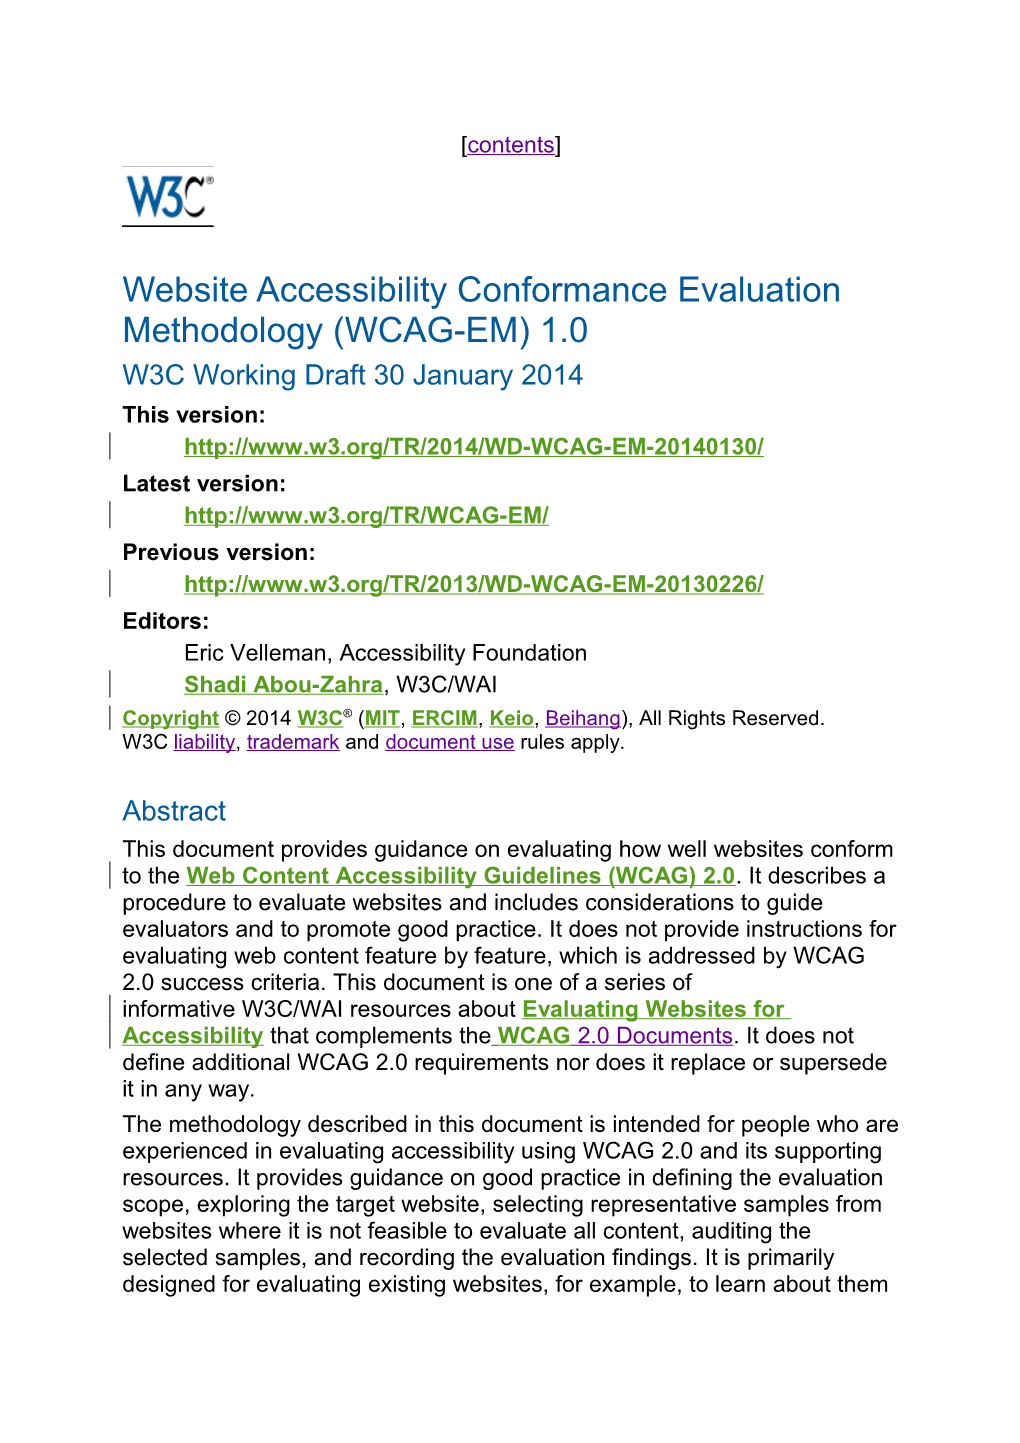 Website Accessibility Conformance Evaluation Methodology (WCAG-EM) 1.0